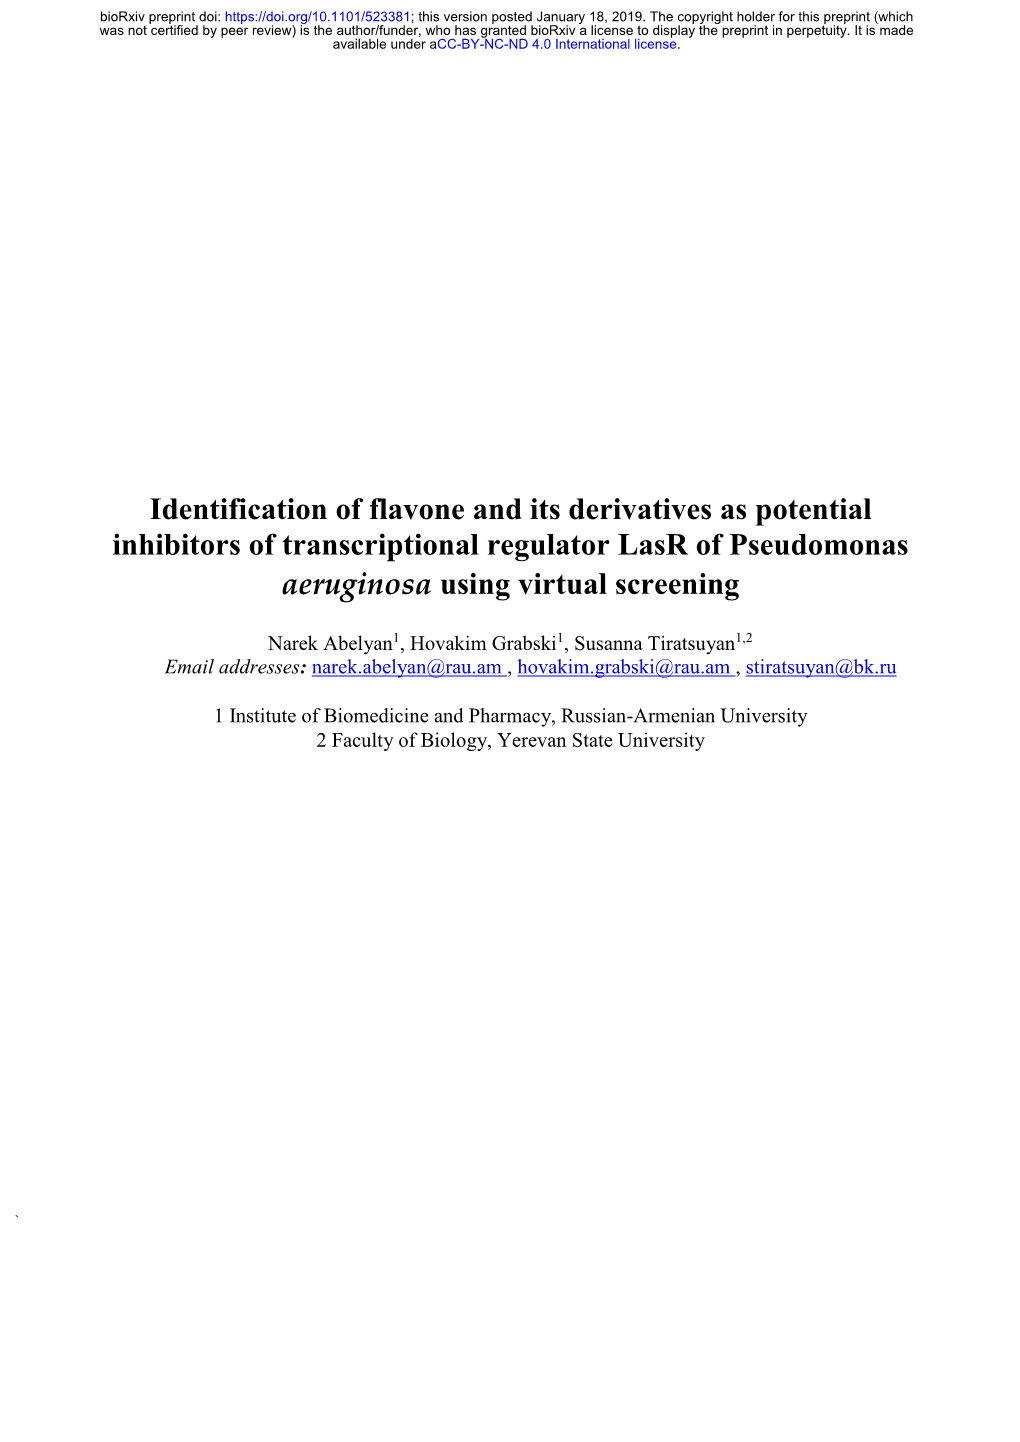 Identification of Flavone and Its Derivatives As Potential Inhibitors of Transcriptional Regulator Lasr of Pseudomonas Aeruginosa Using Virtual Screening